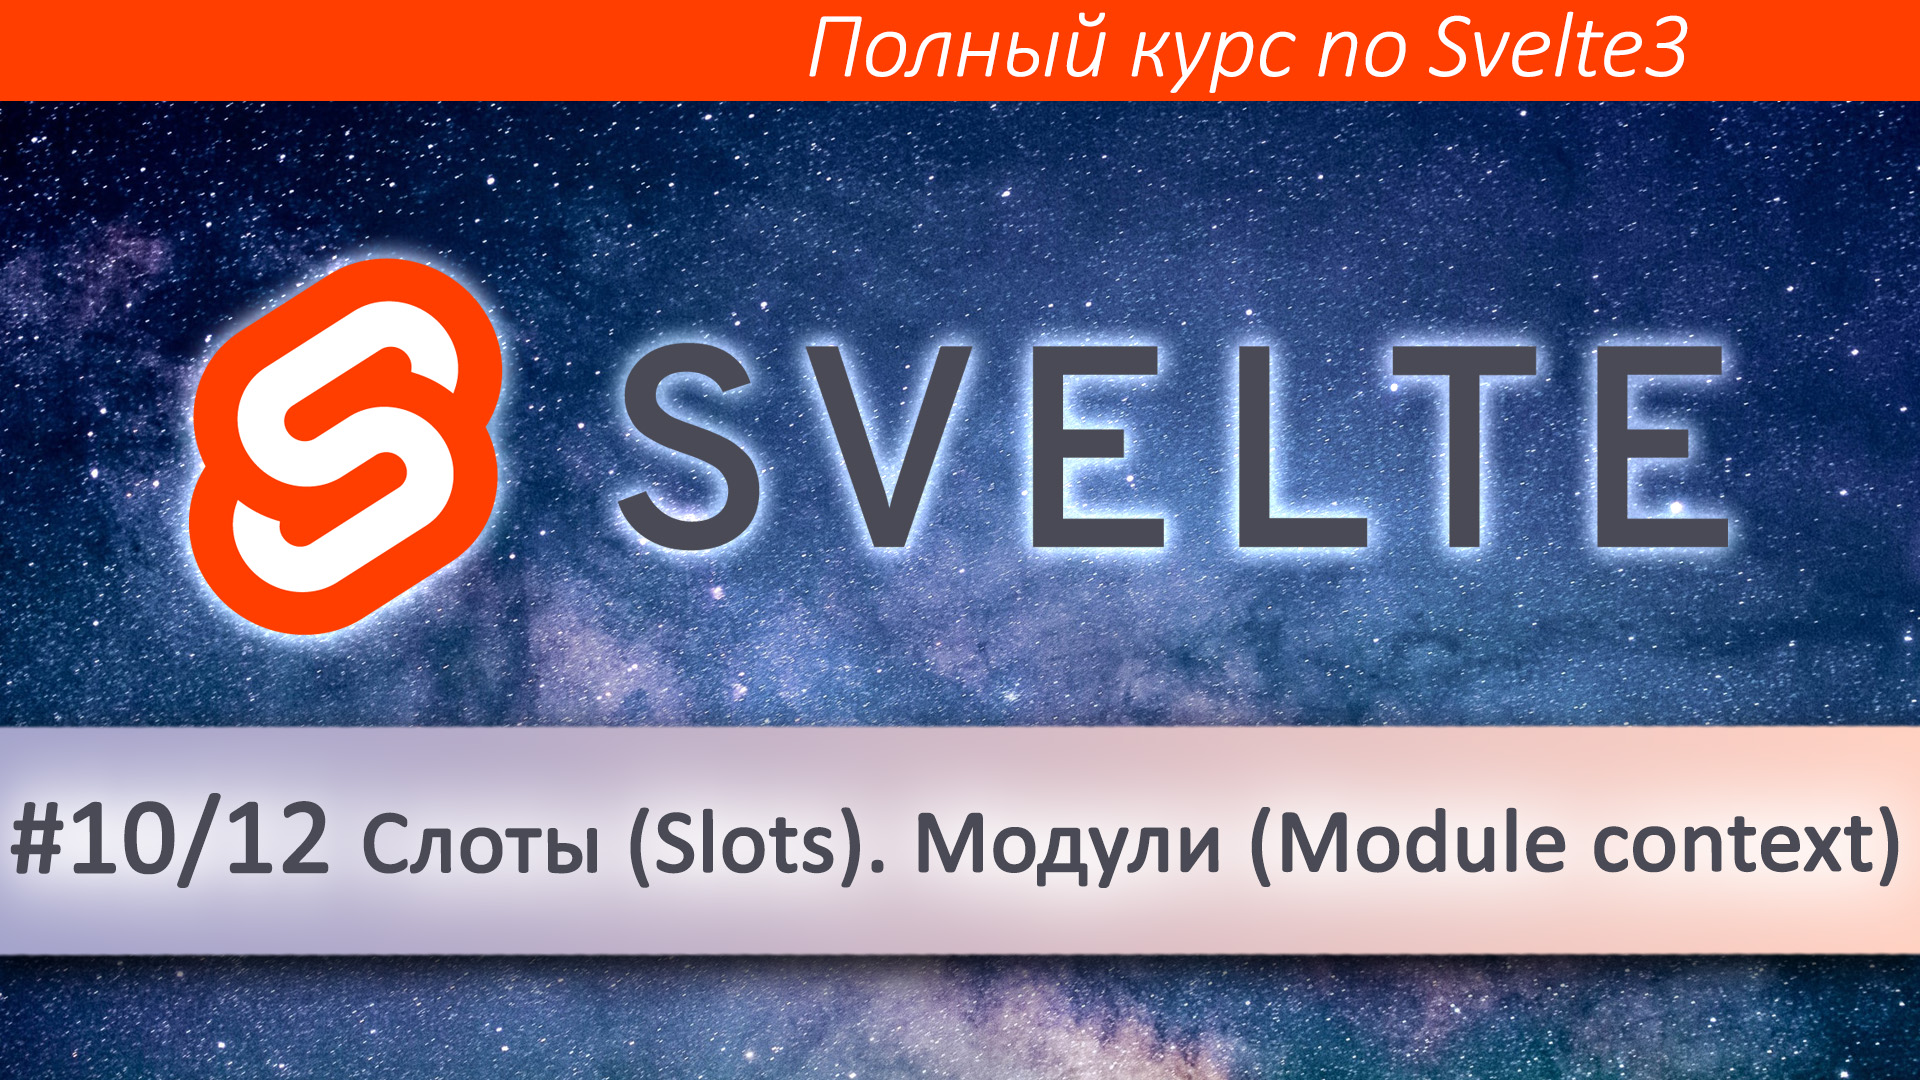 Svelte 10/12. Слоты - Svelte slots. Context Модуль - Svelte module context (Svelte курс)